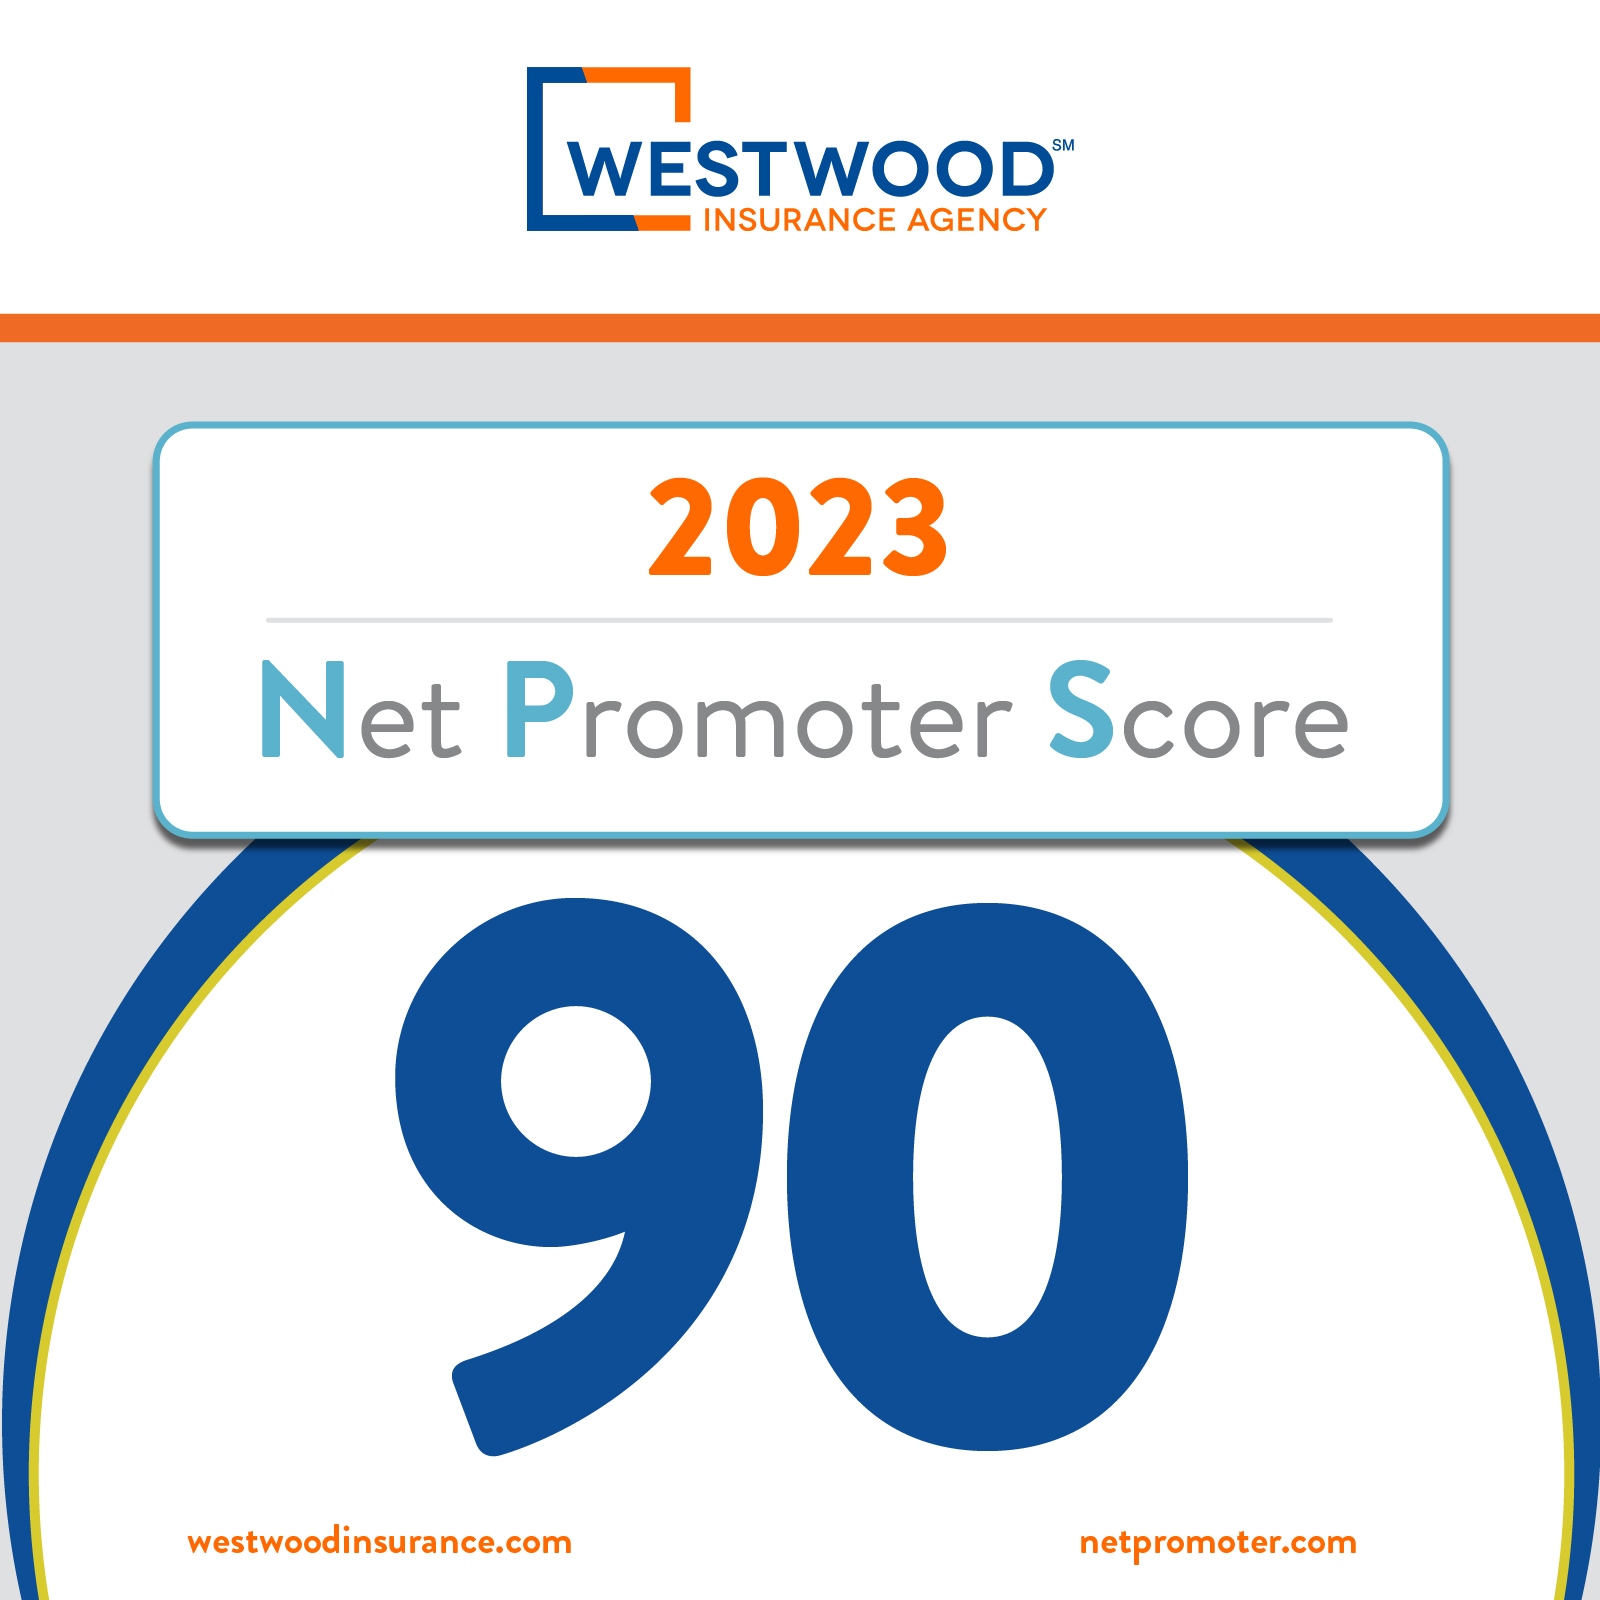 Net Promoter Score of 90 for Westwood Insurance Agency 2023